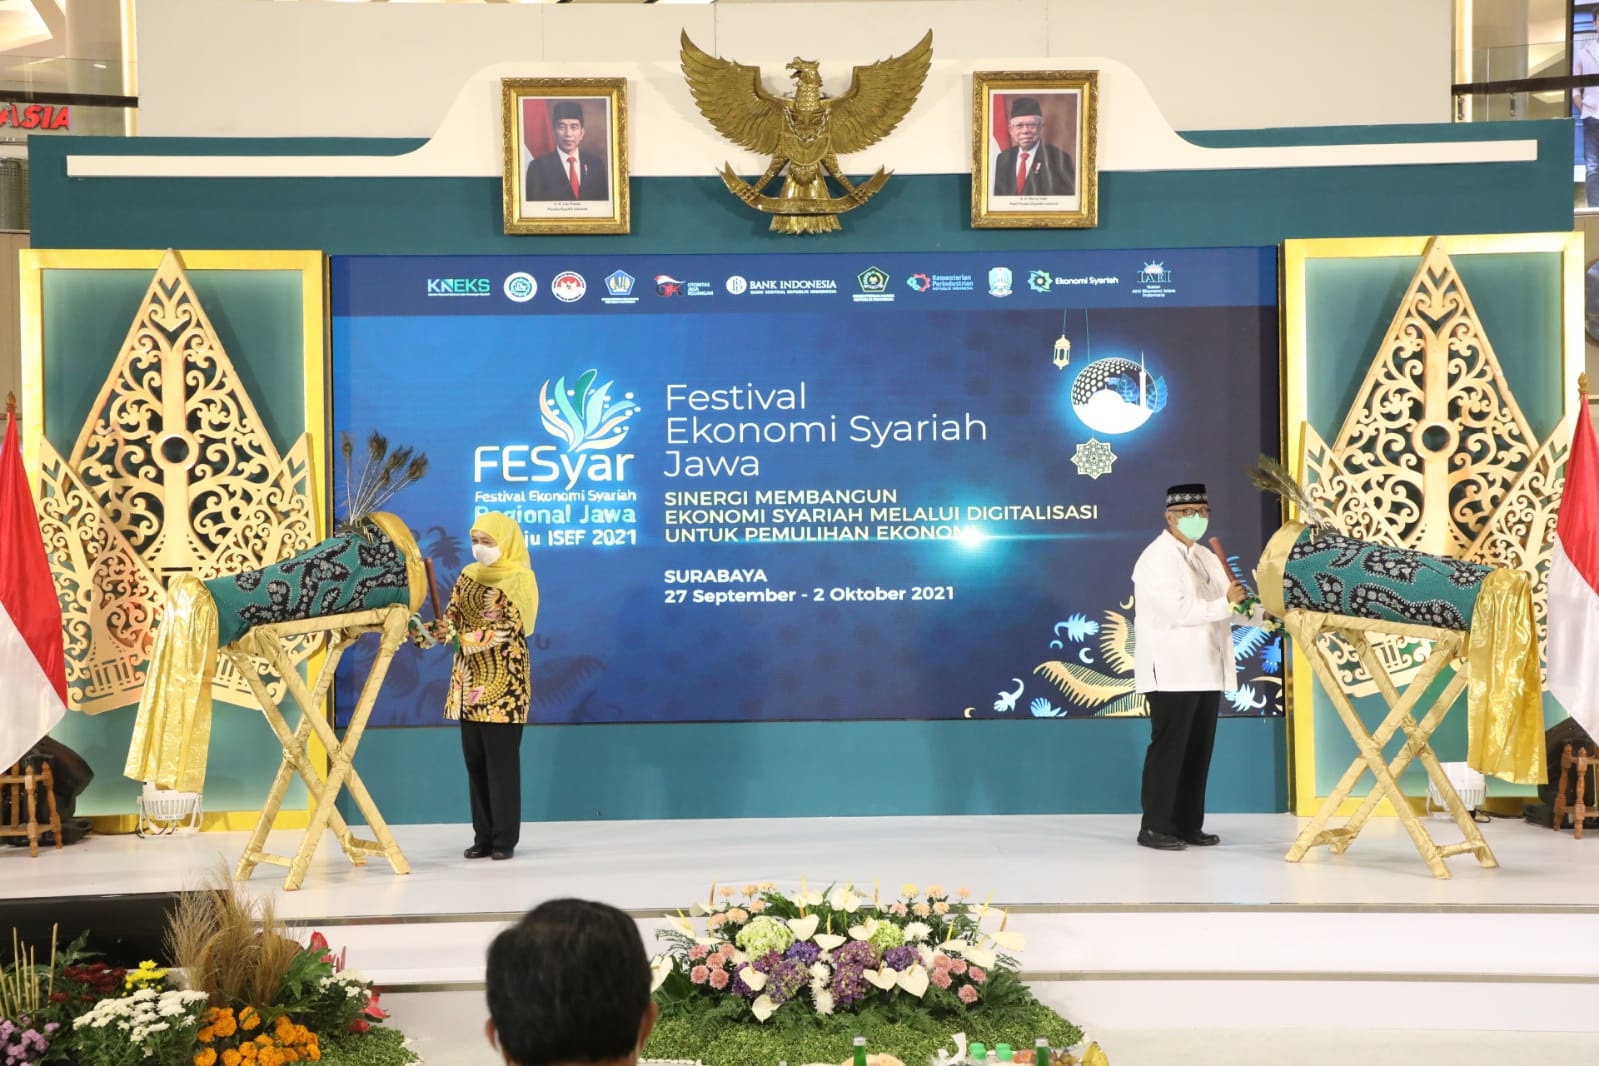 Fesyar Regional Jawa 2021, Jatim Central Ekonomi Syariah Indonesia